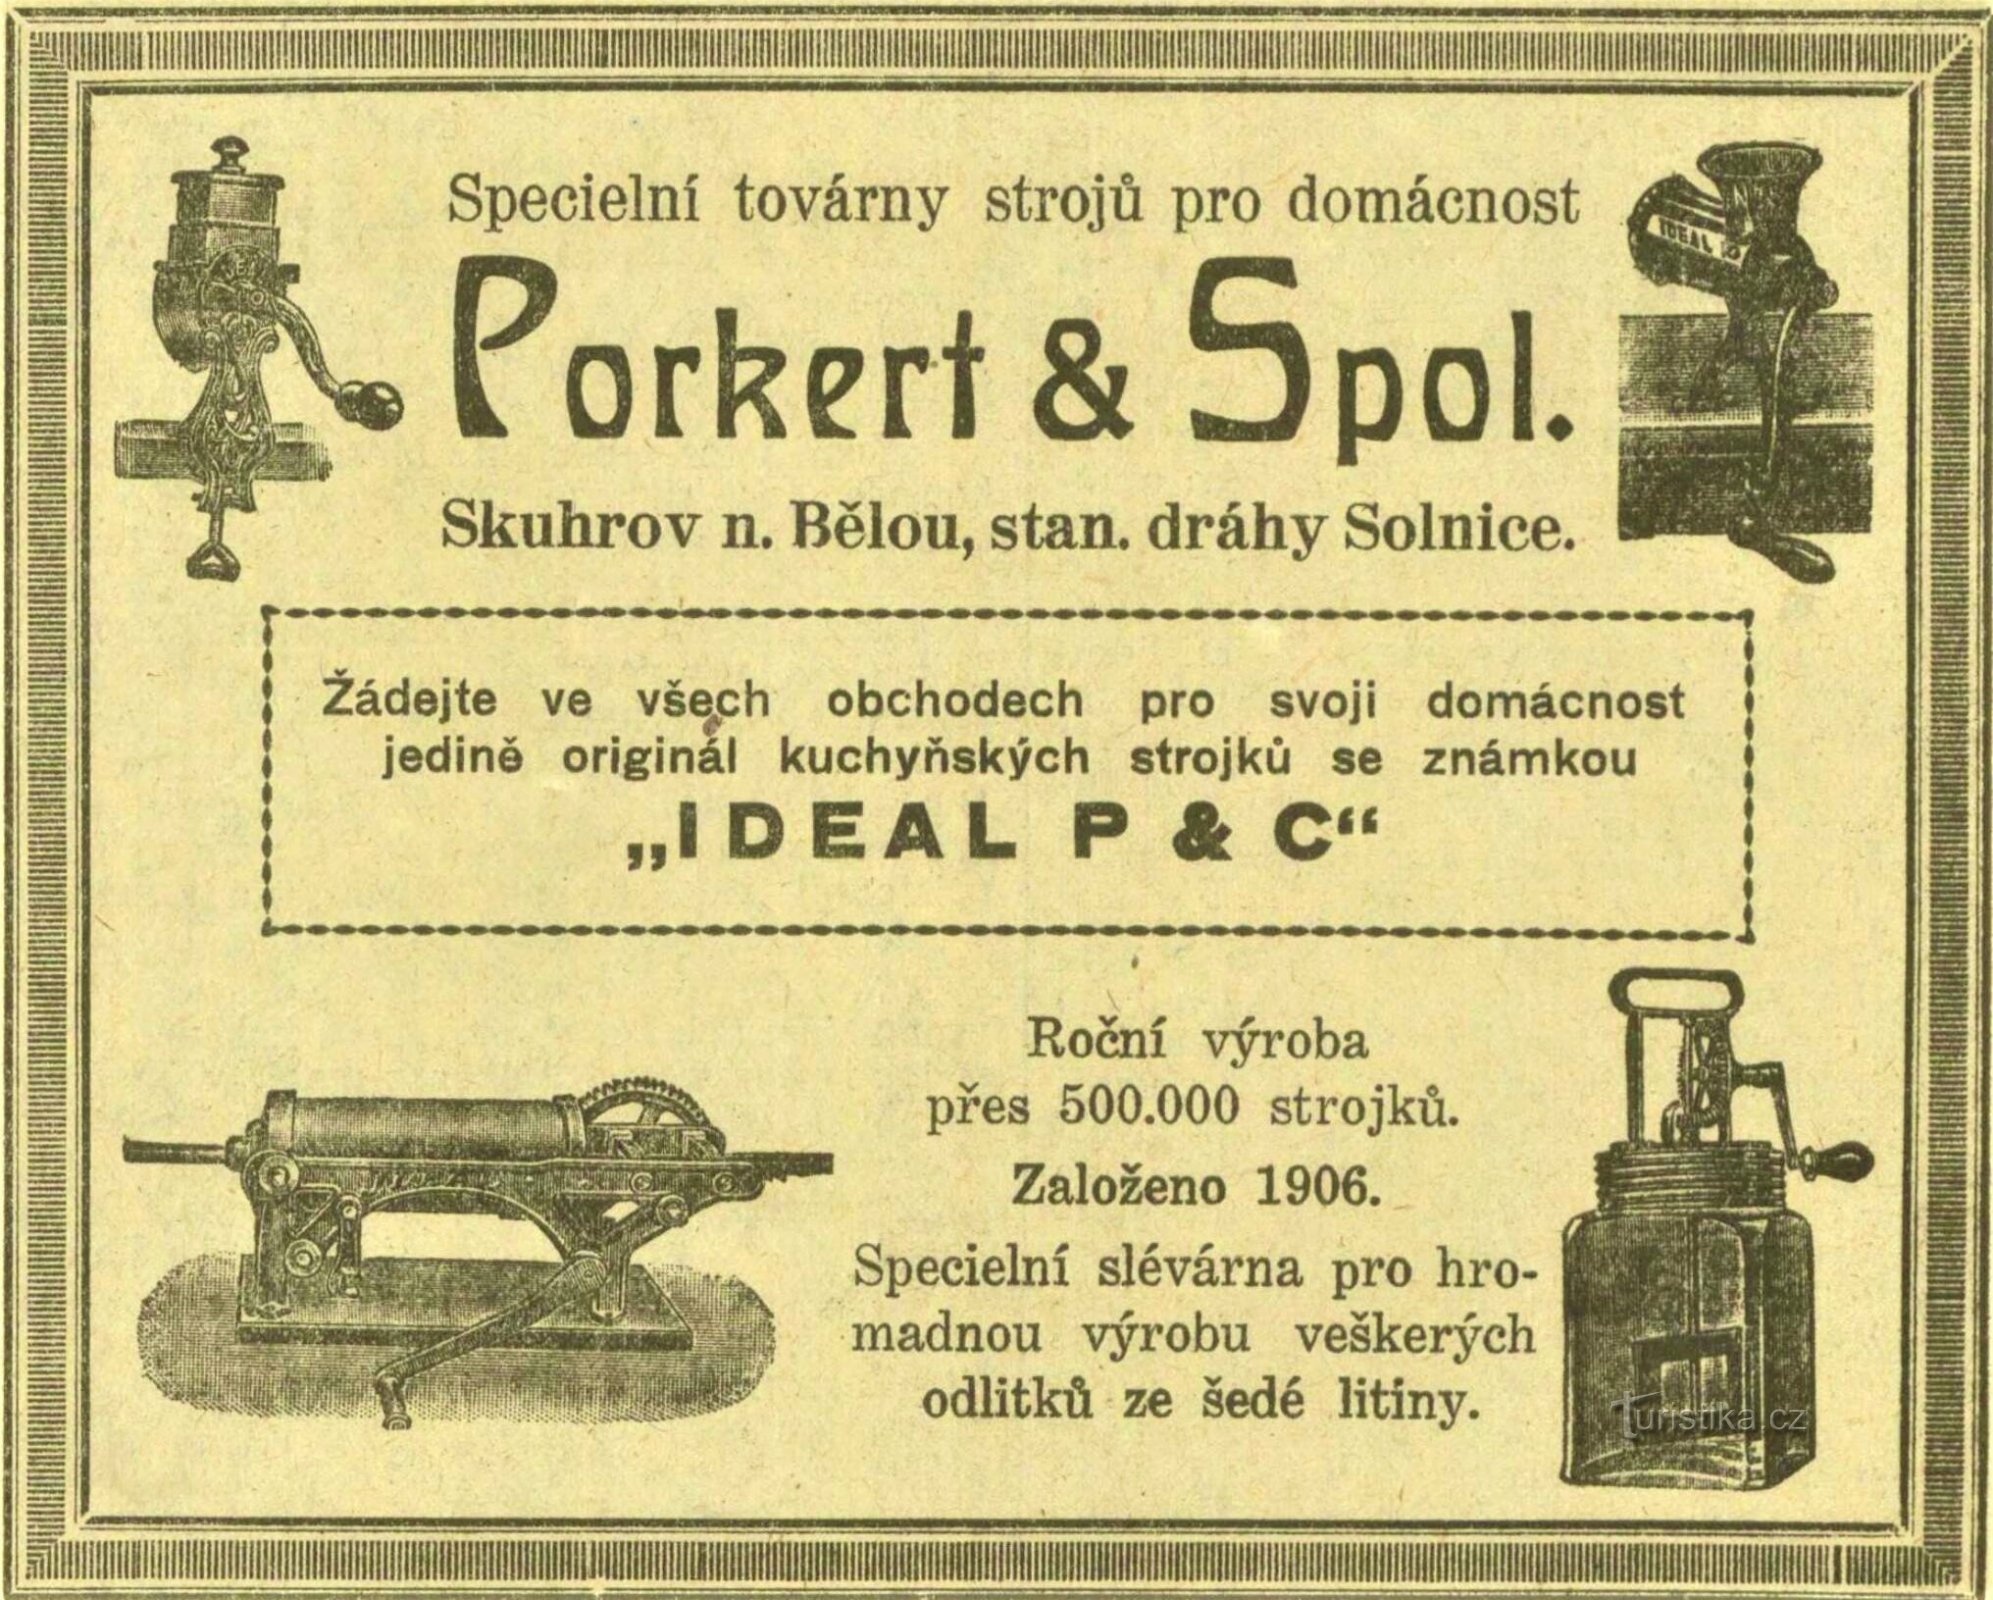 Periodična reklama tvornice Porkert u Skuhrovu nad Bělou iz 1930.